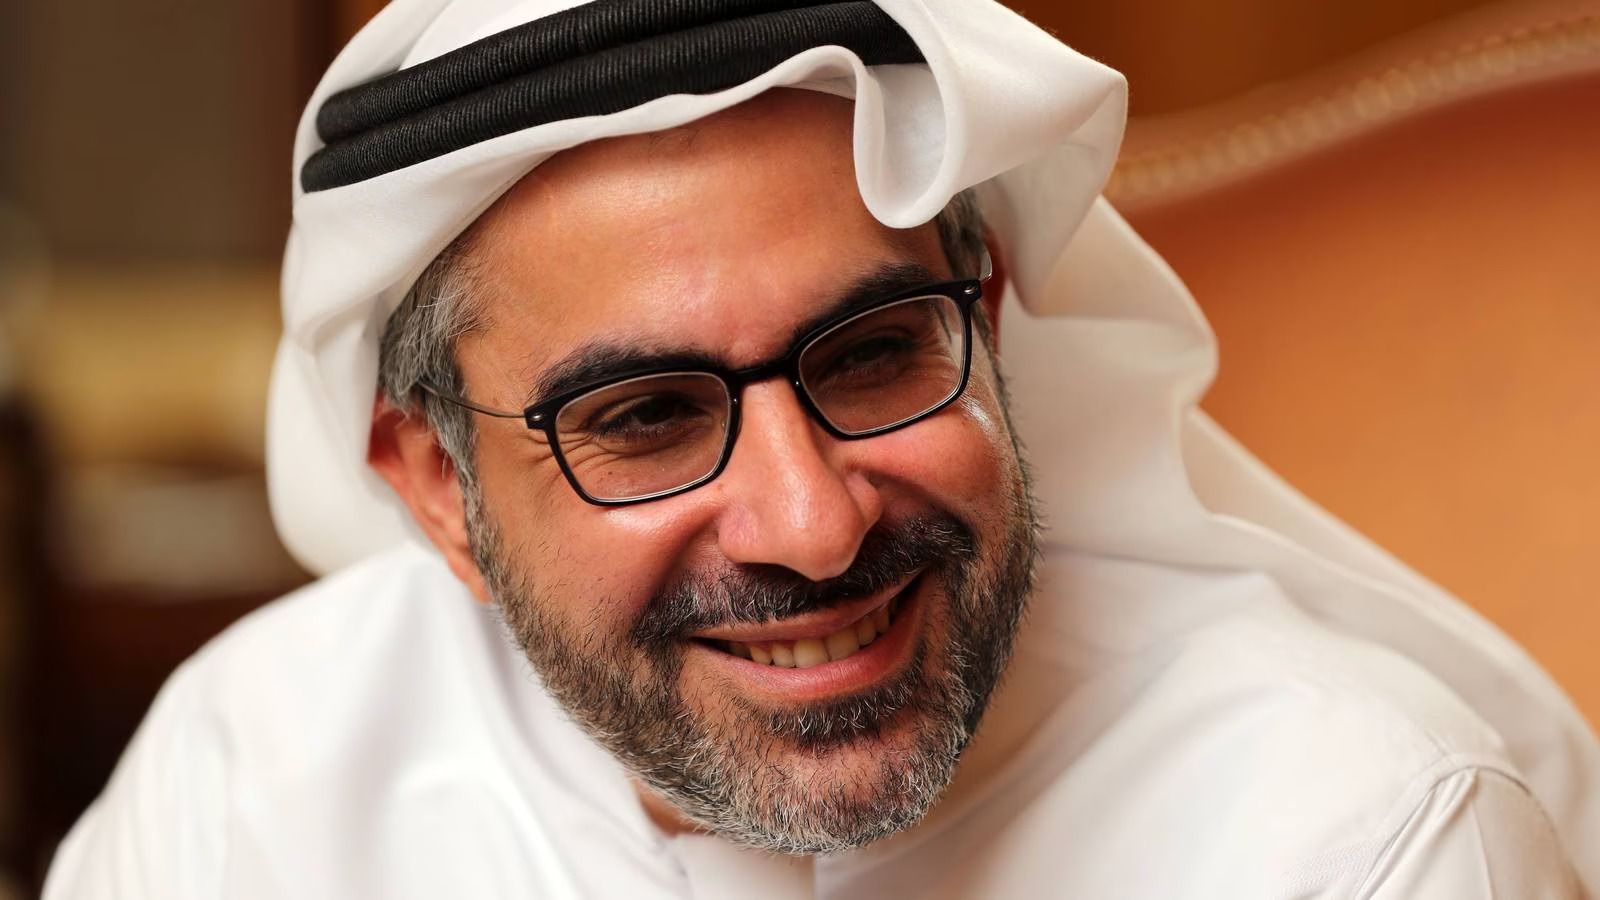 Mubadala to expand UAE companies' operations to compete globally